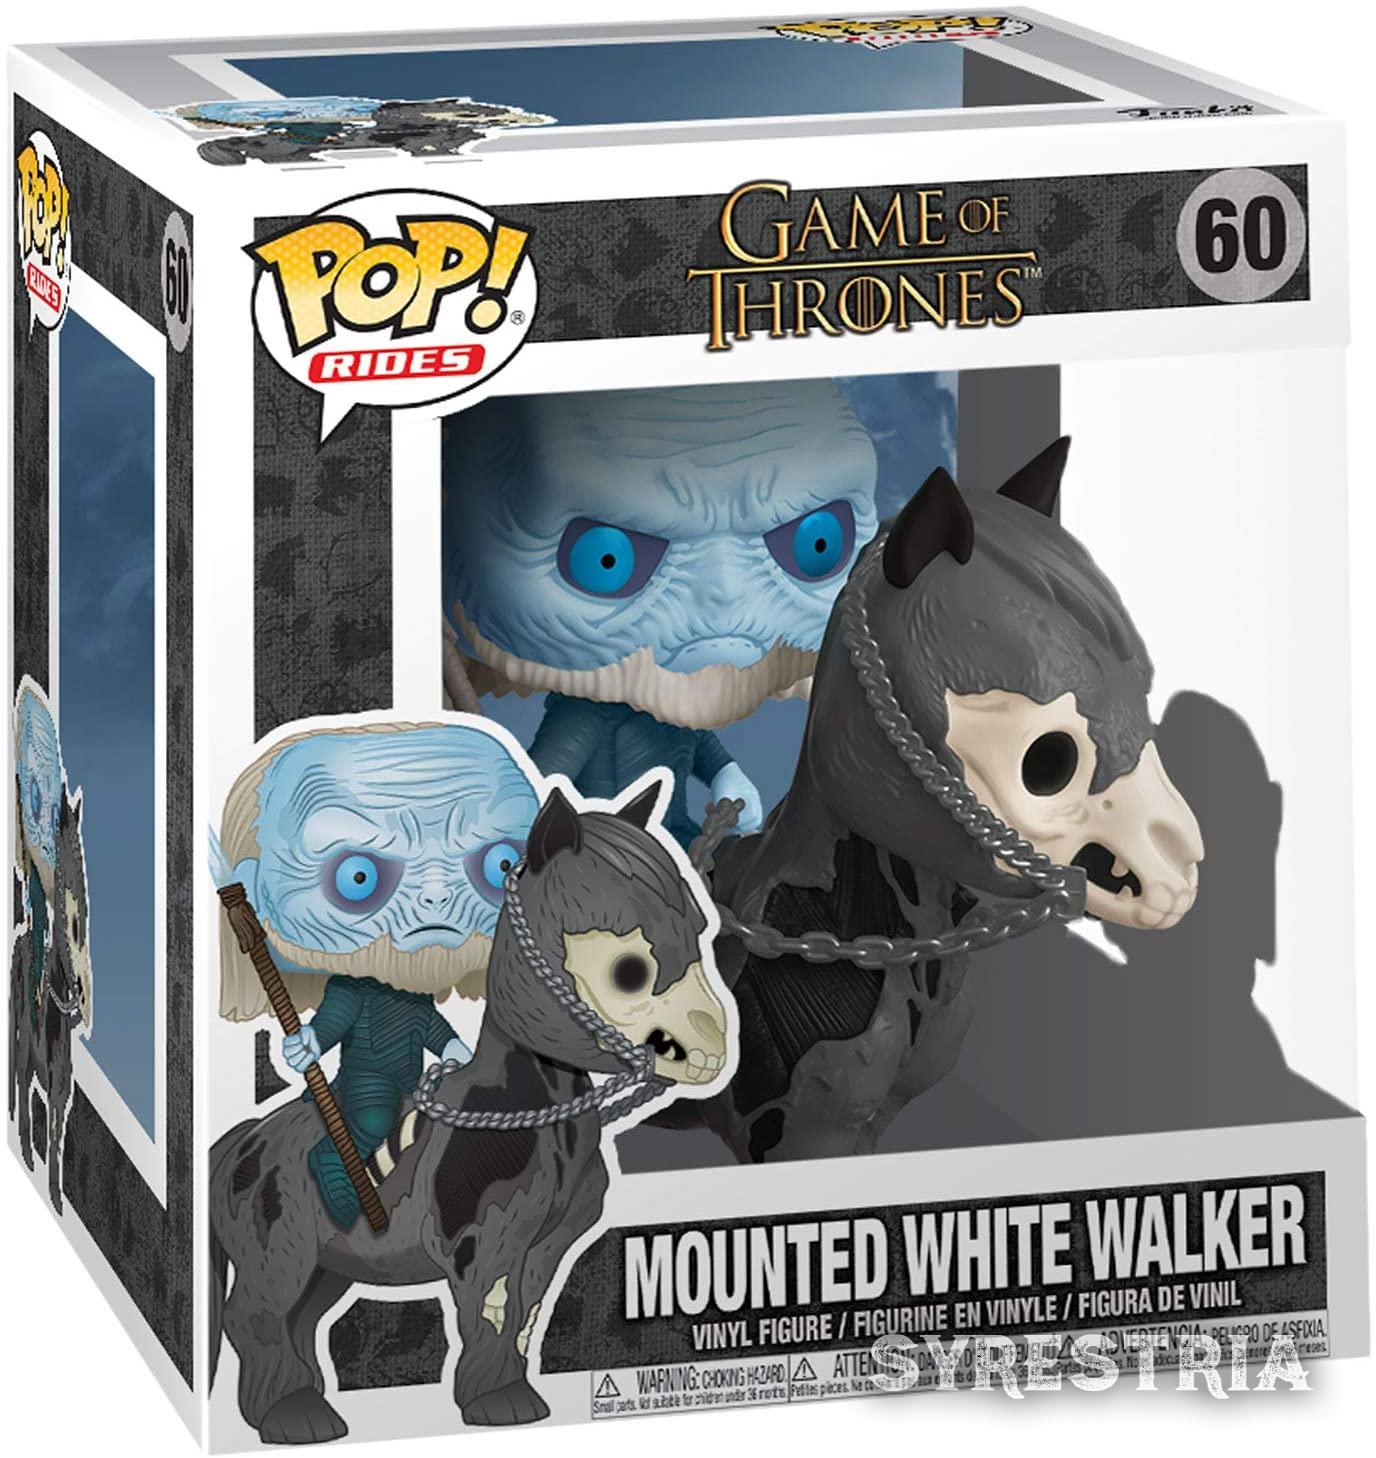 Game of Thrones - Mounted White Walker 60 - Funko Pop! - Vinyl Figur